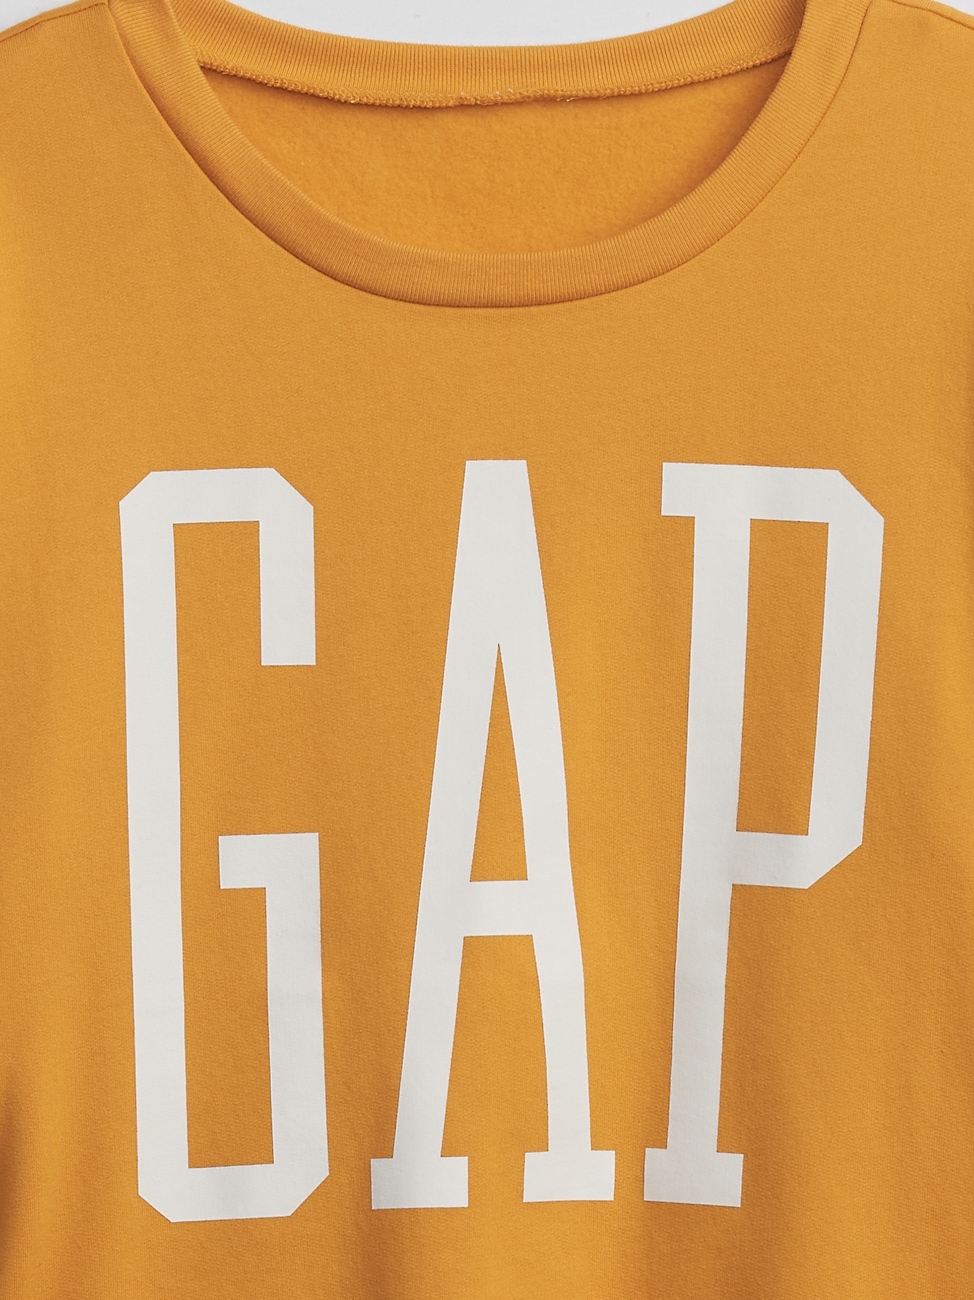 Gap Logo Crewneck Sweatshirt | Gap Factory